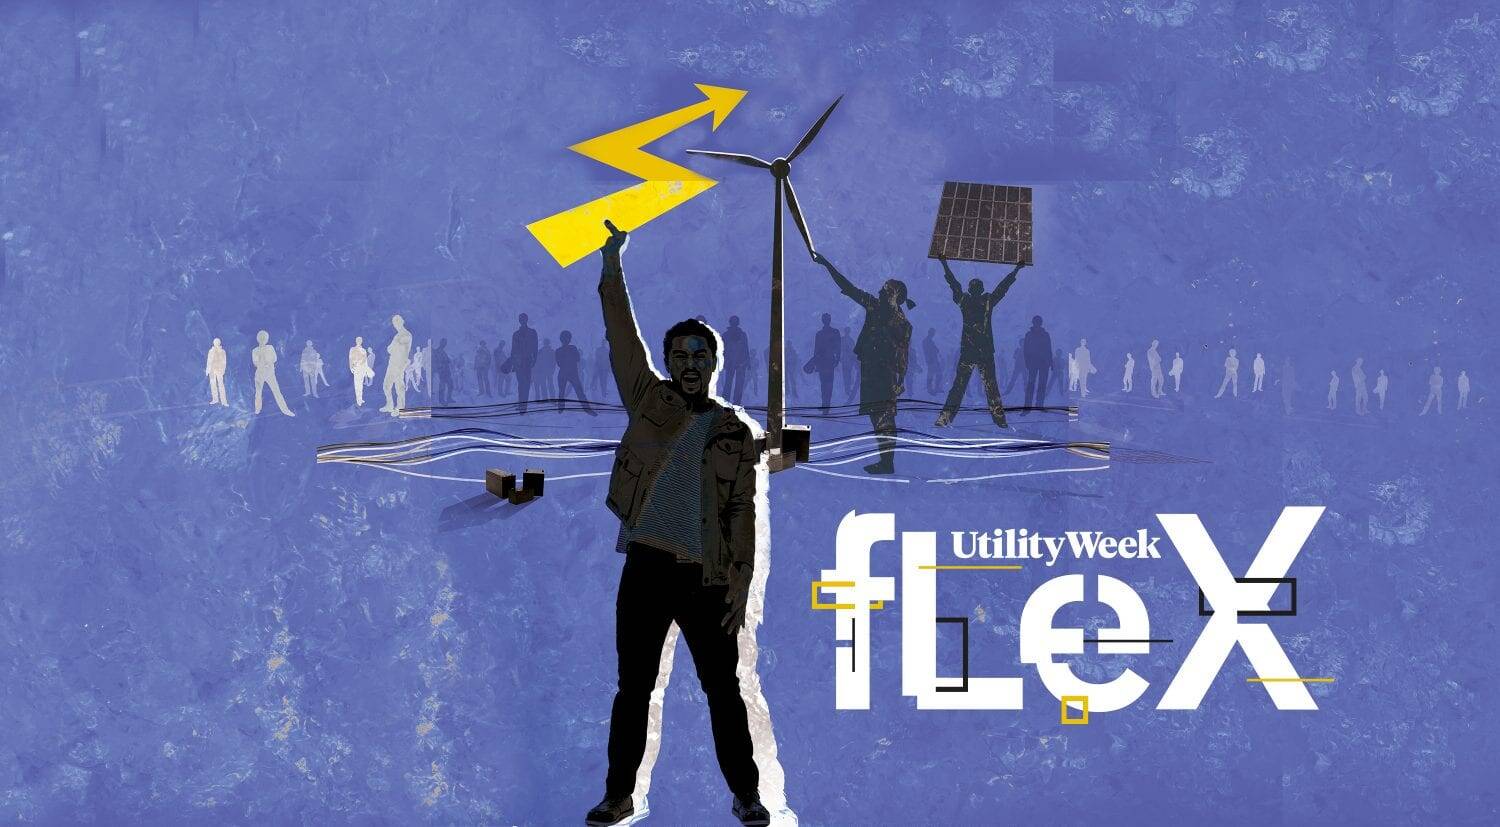 Flex 2: The power generation